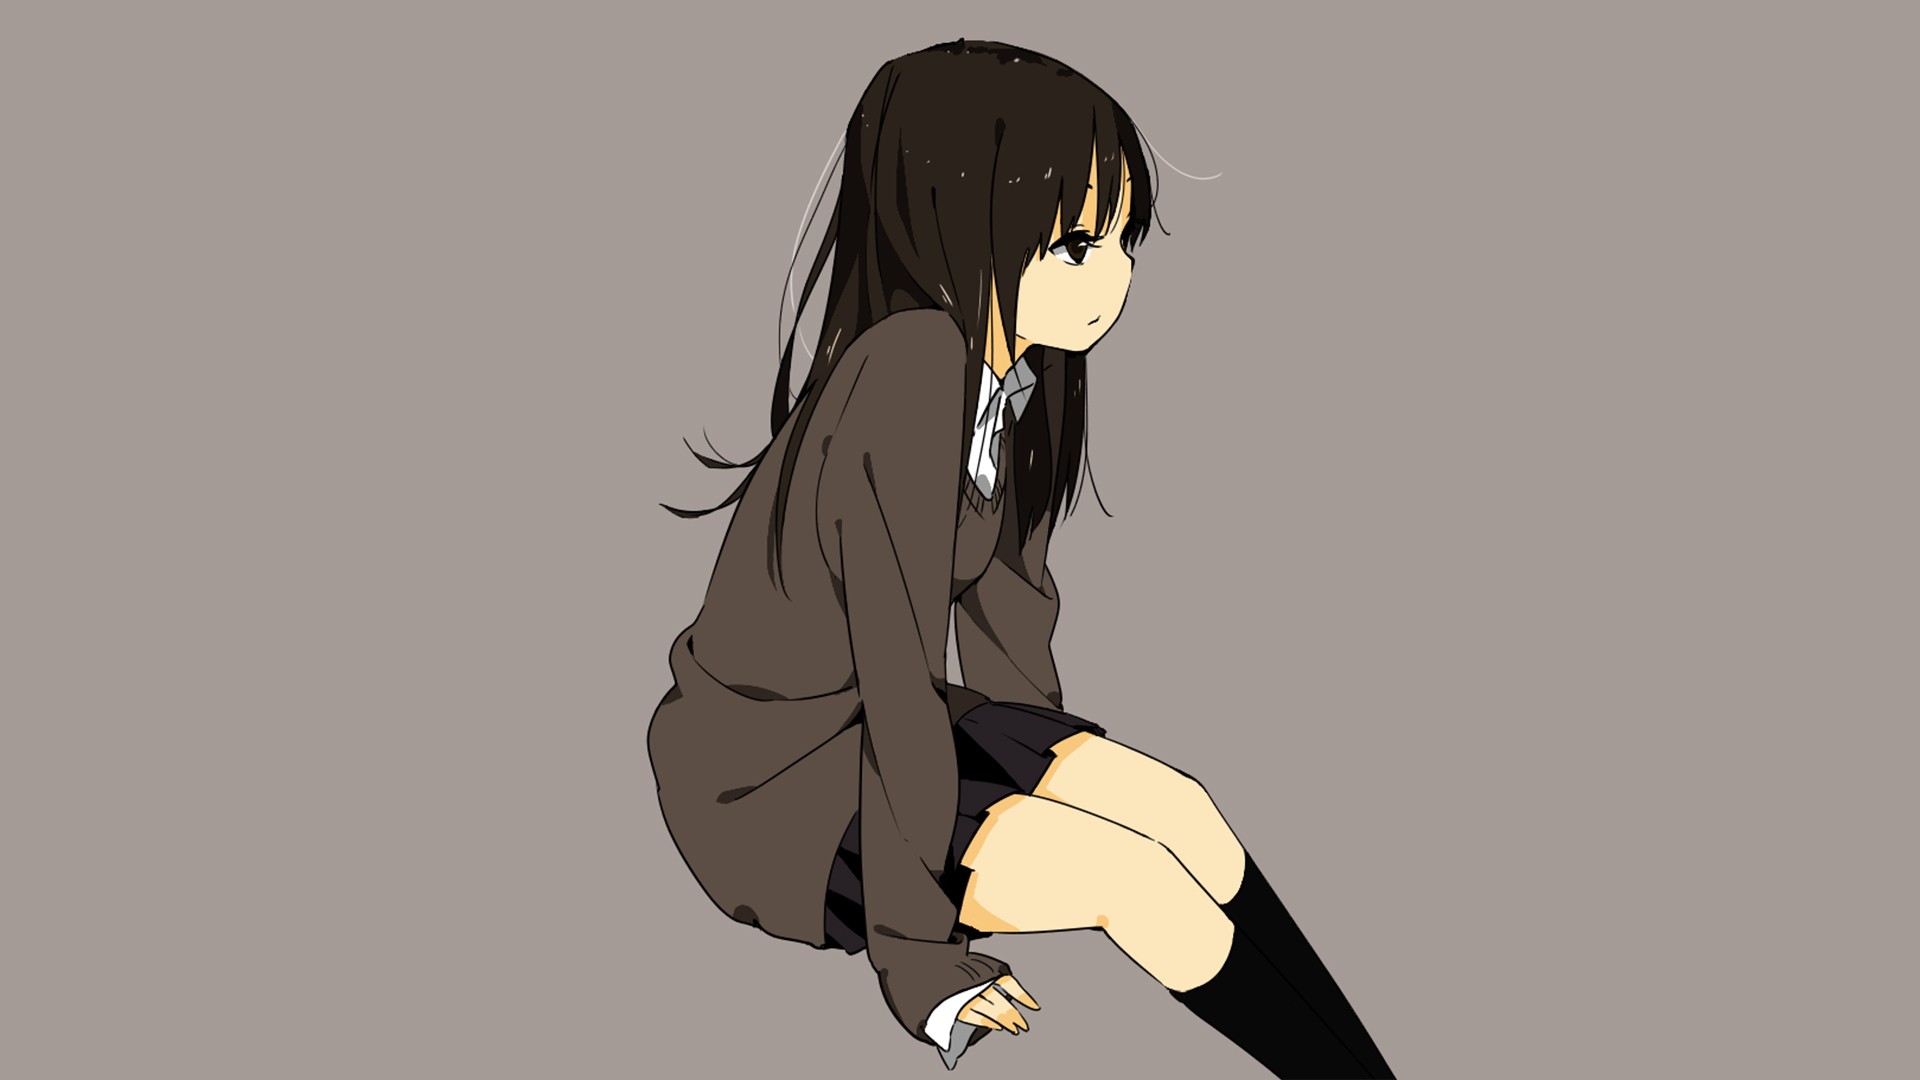 Sad Anime Girl Wallpaper - Anime Girl School Uniform Black And White , HD Wallpaper & Backgrounds